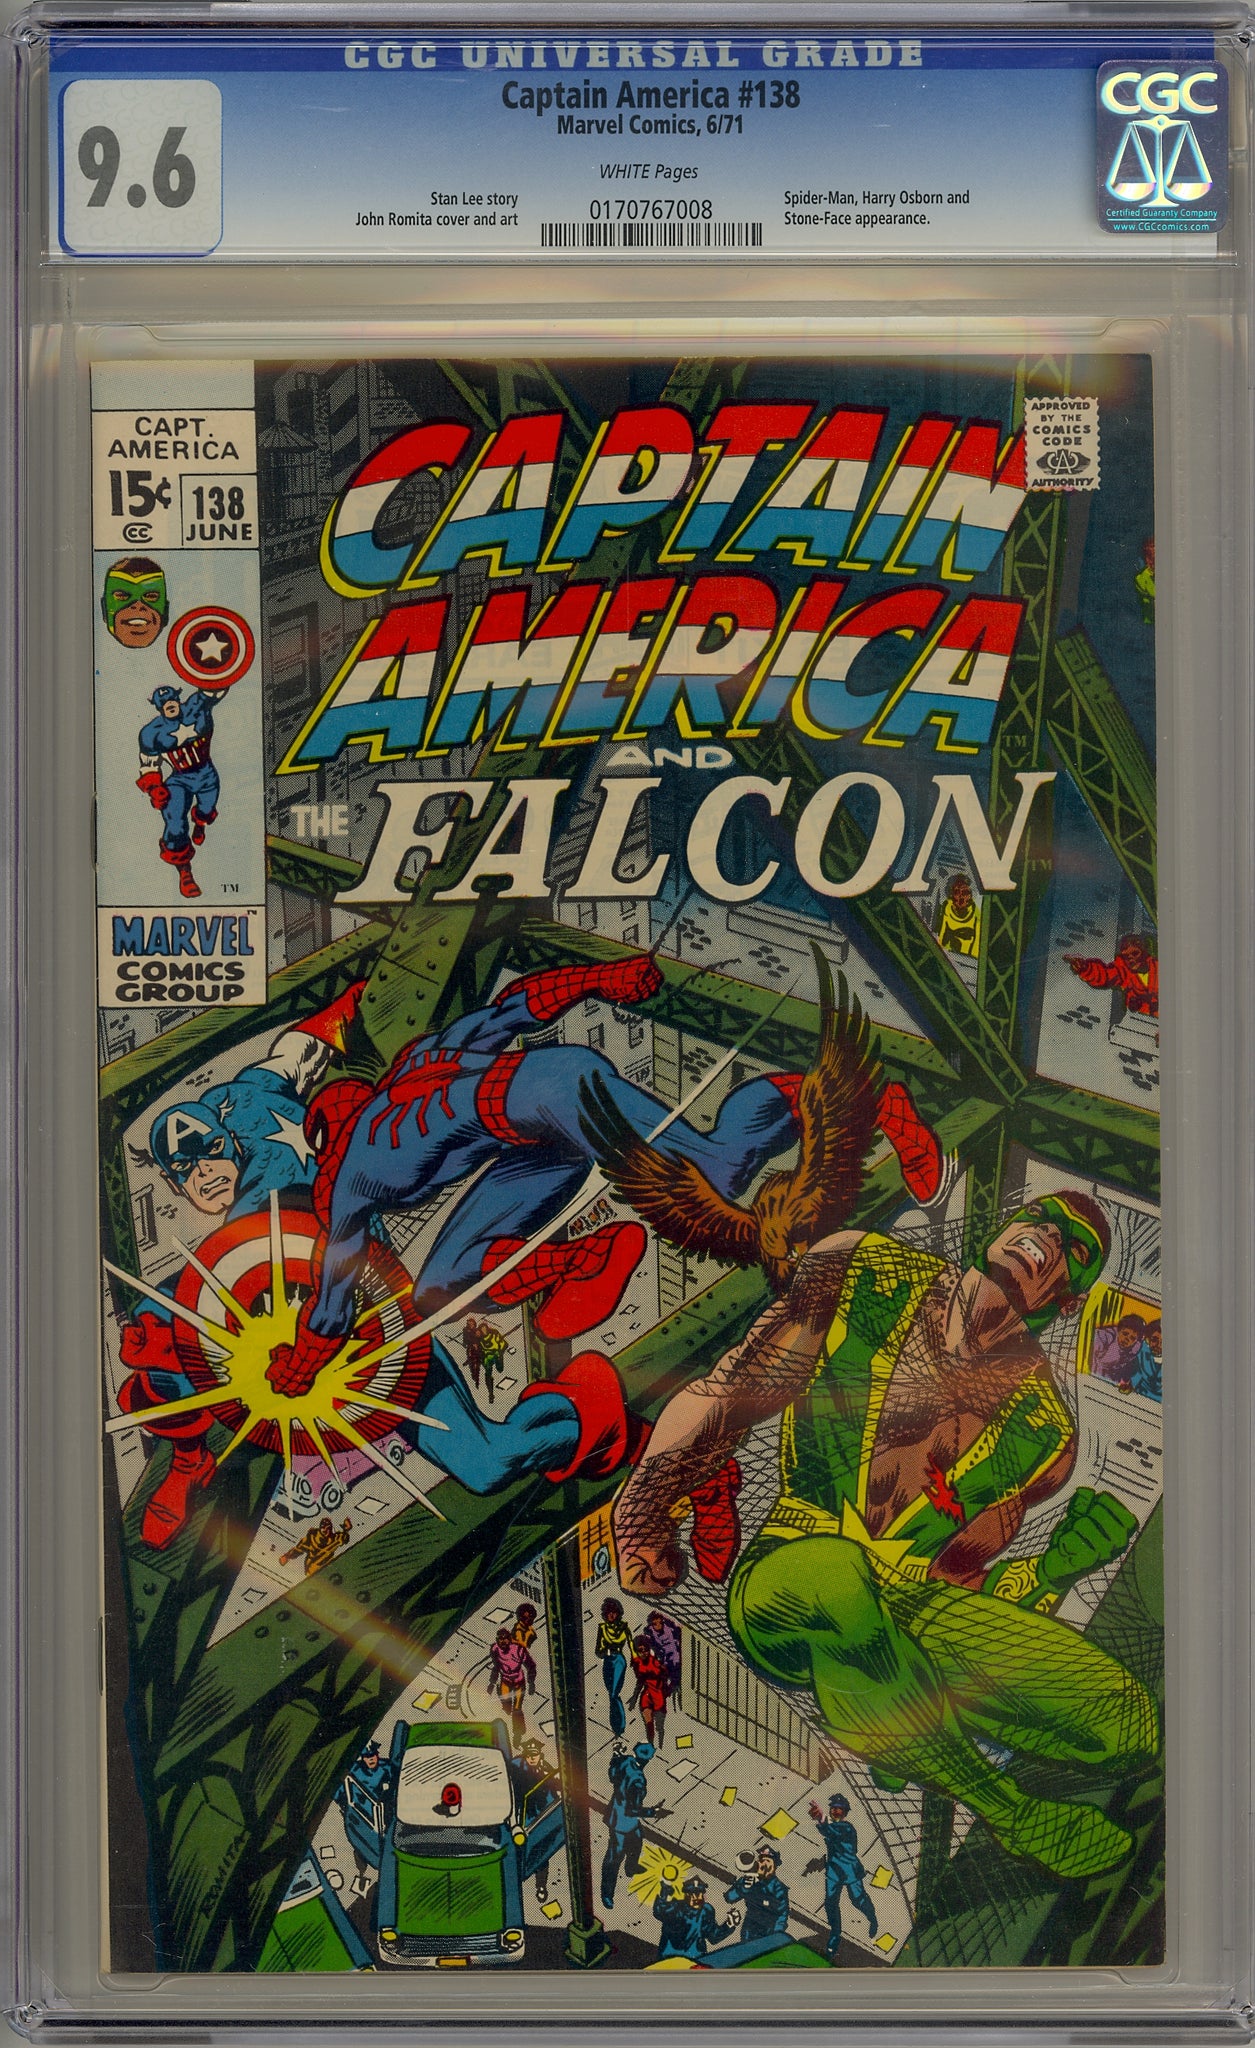 Captain America #138 (1971) Spider-Man, Harry Osborn